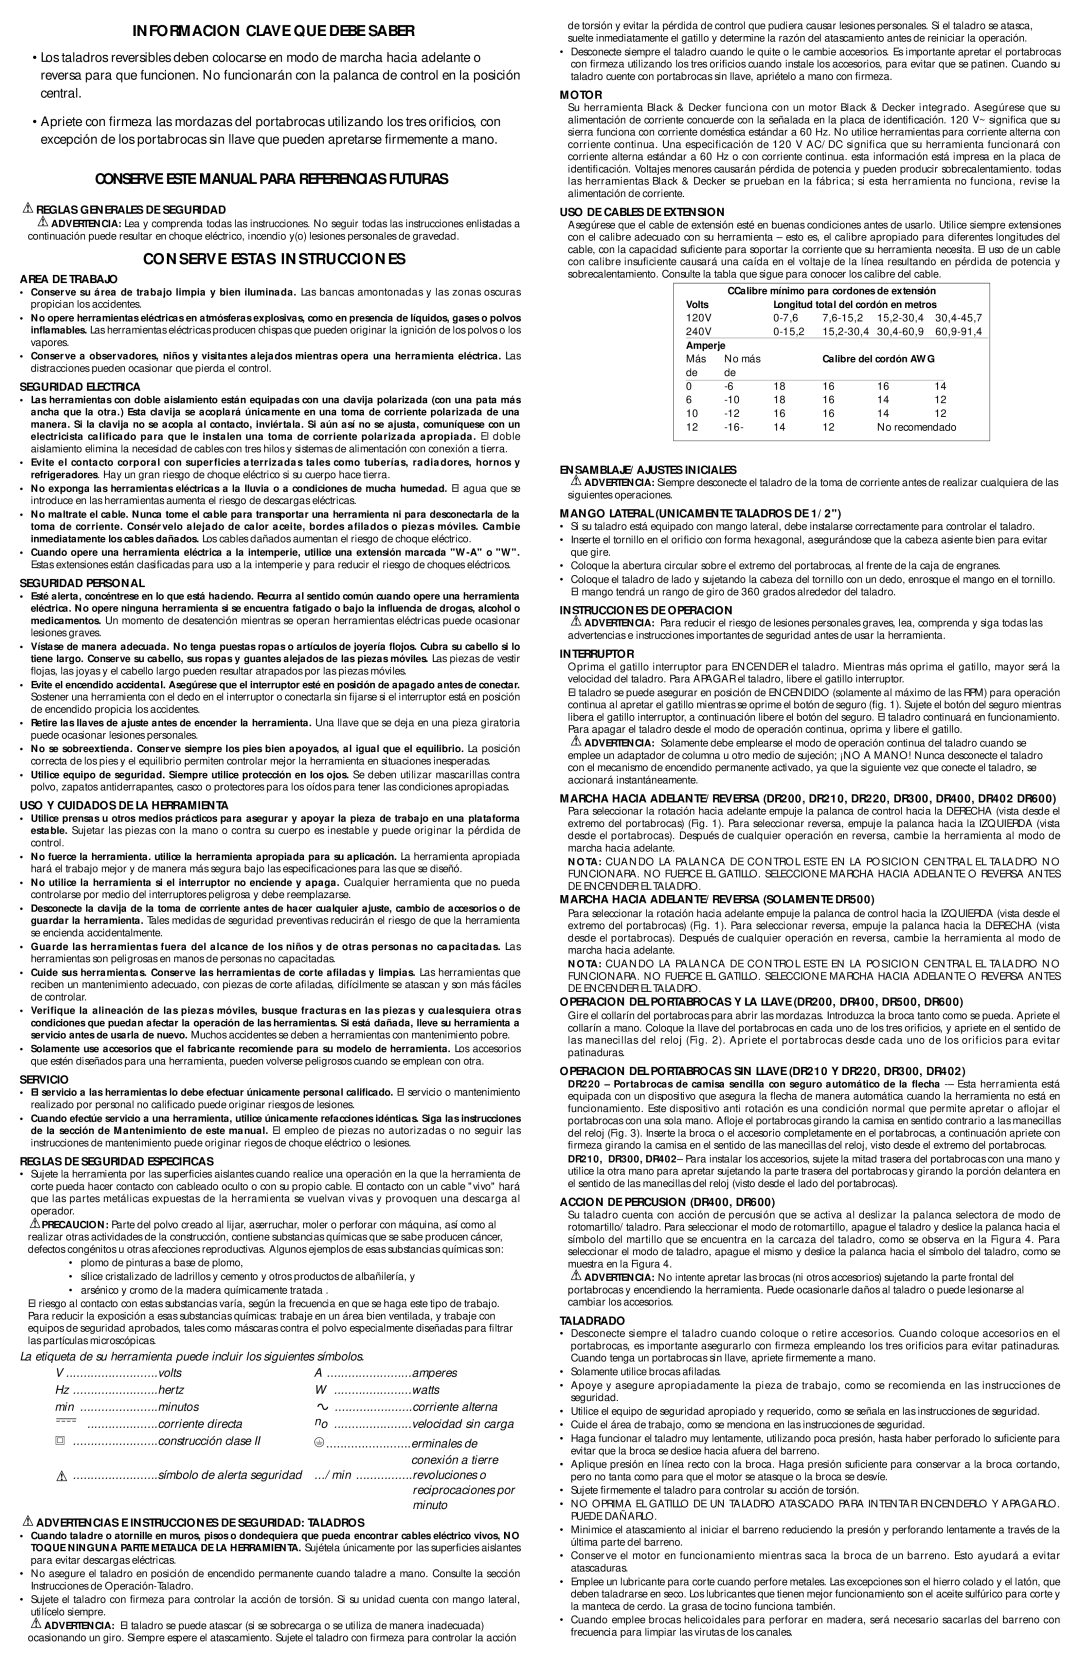 Black & Decker DR300, 386001-02, DR402 Informacion Clave Que Debe Saber, Conserve Este Manual Para Referencias Futuras 